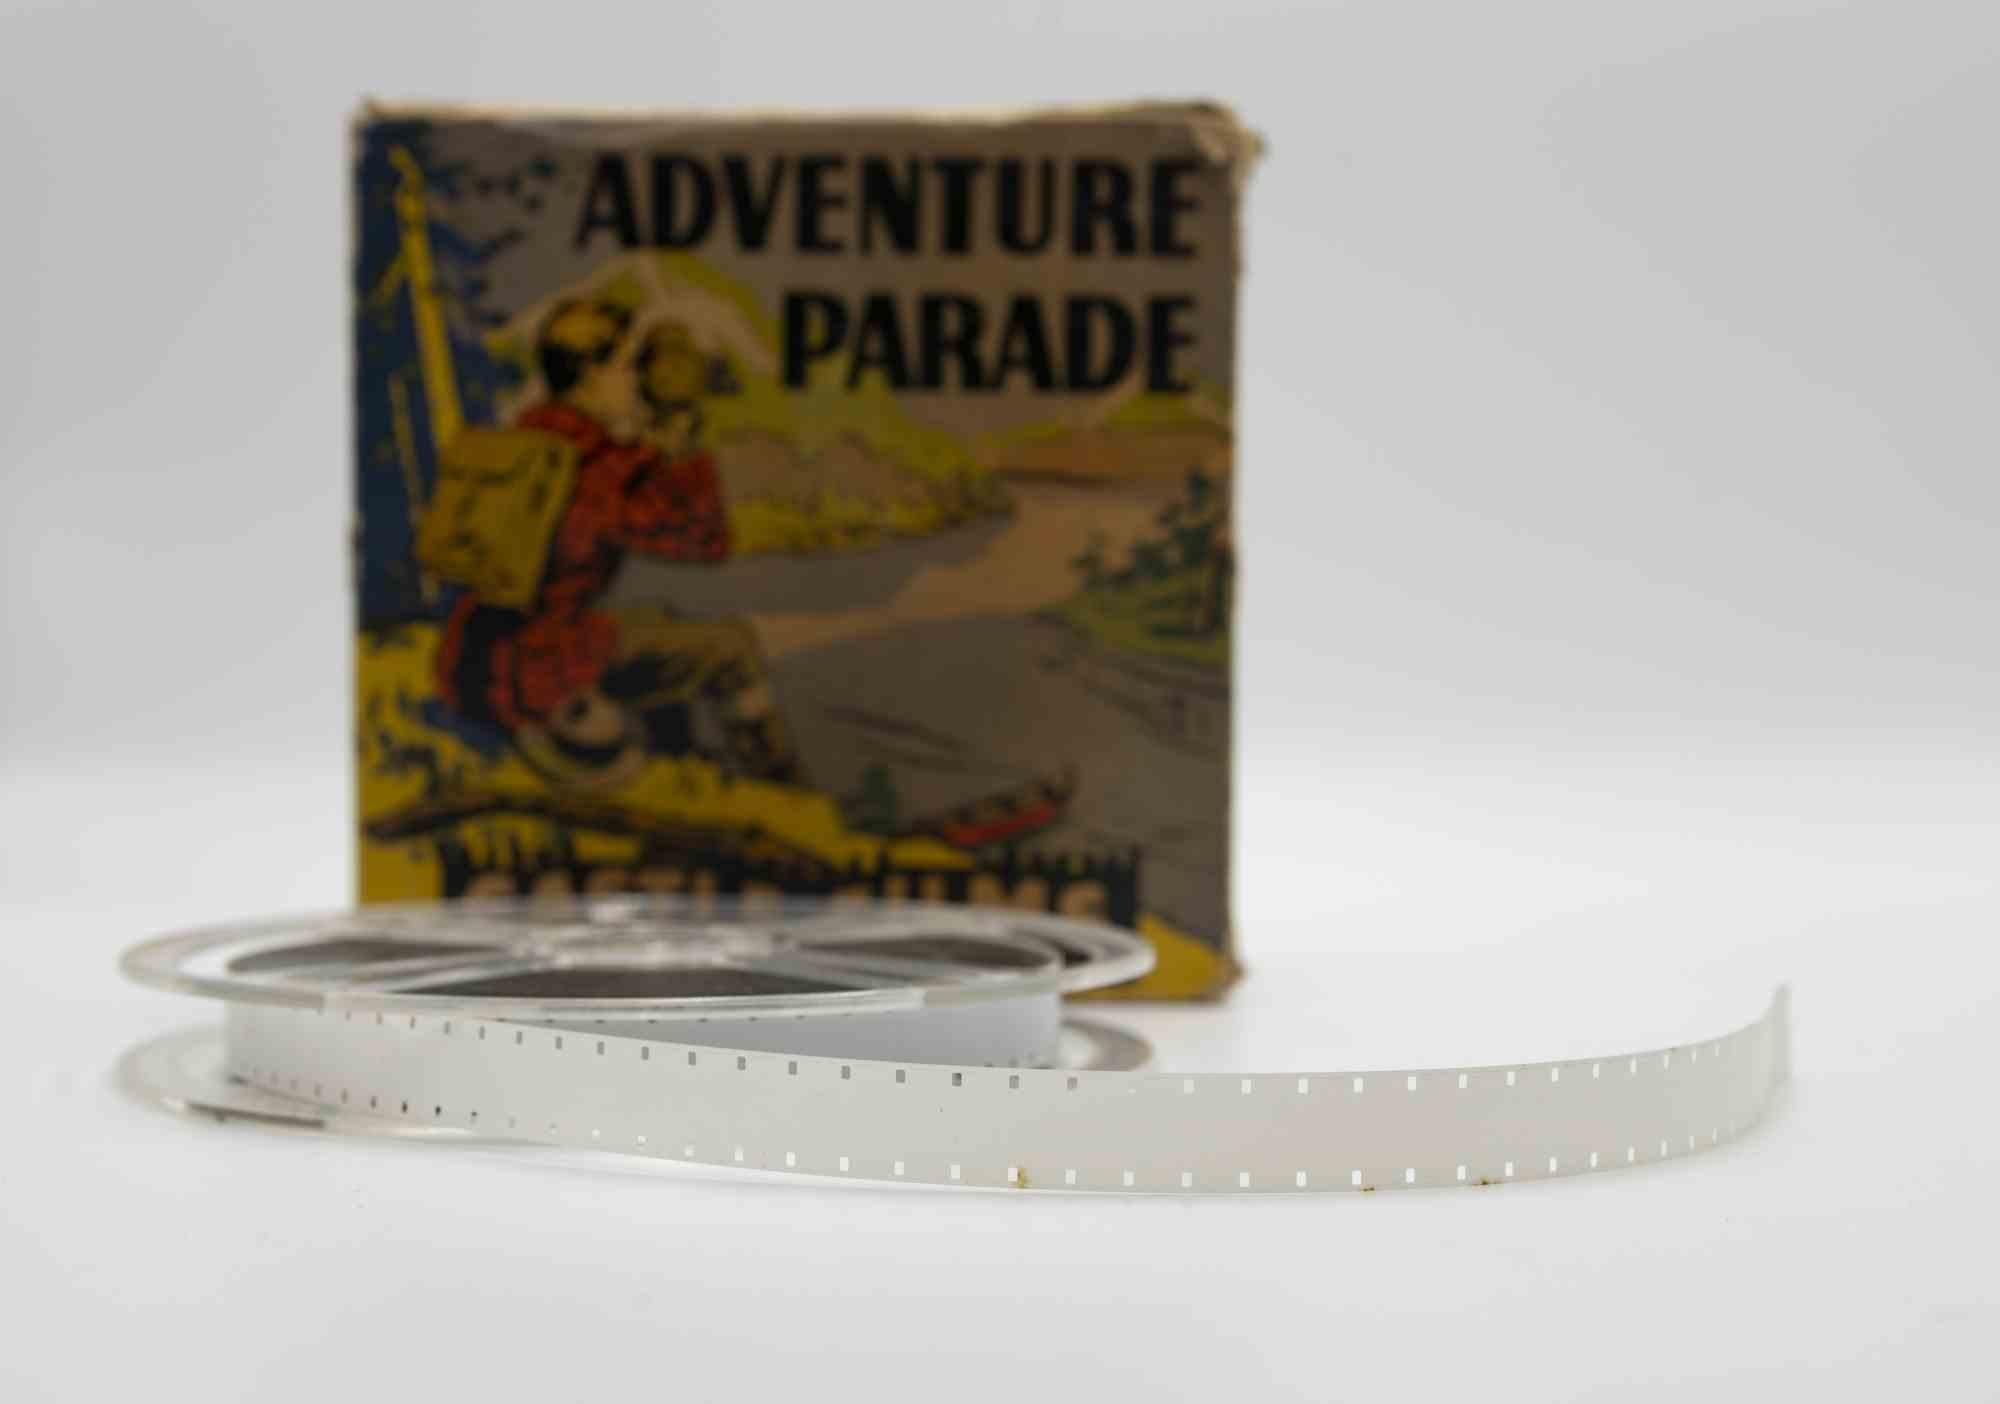 European Adventure Parade, 1950s For Sale